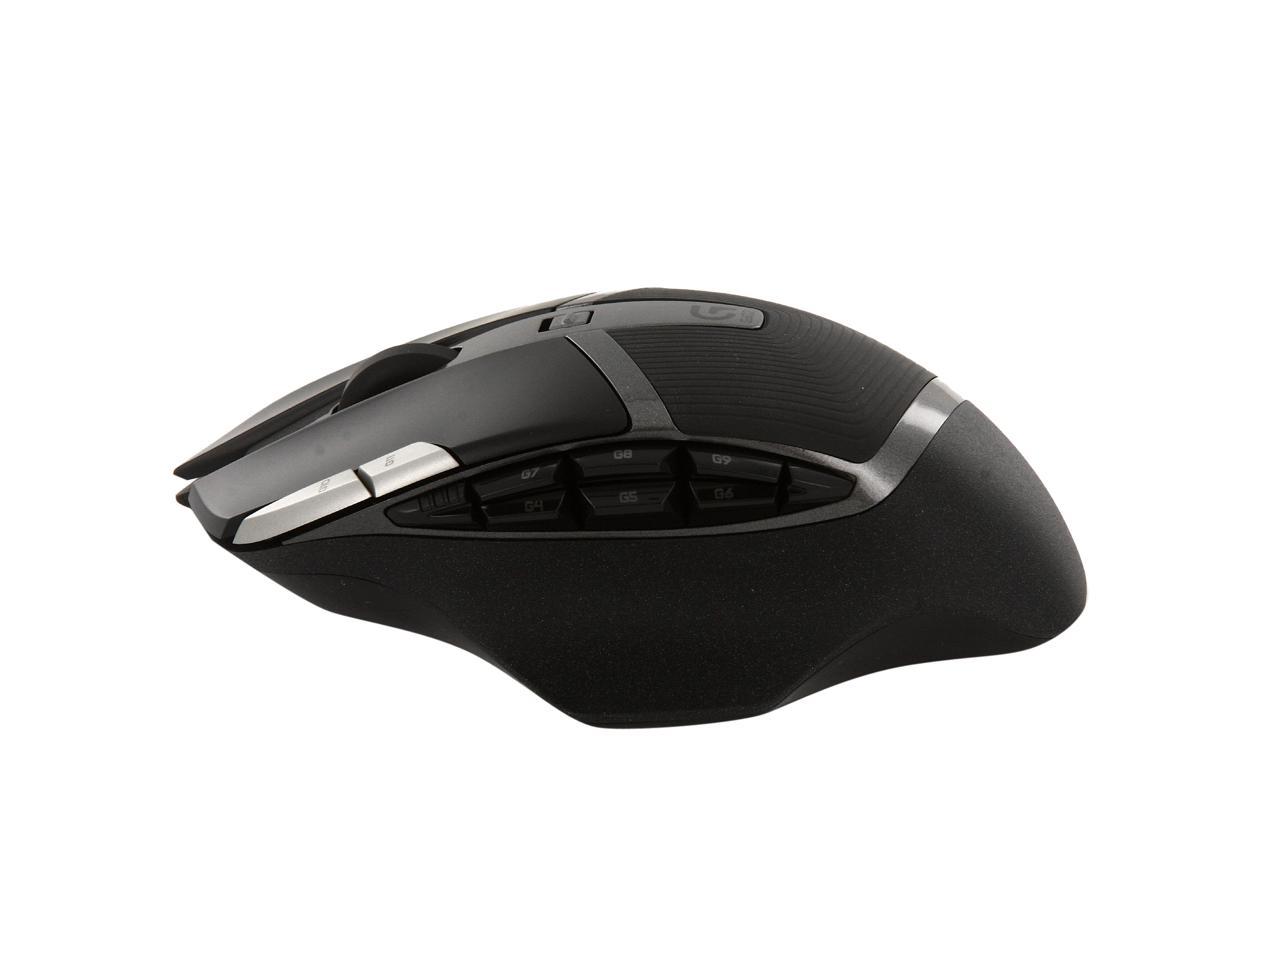 Logitech G602 Wireless Optical Gaming Mouse - Newegg.com